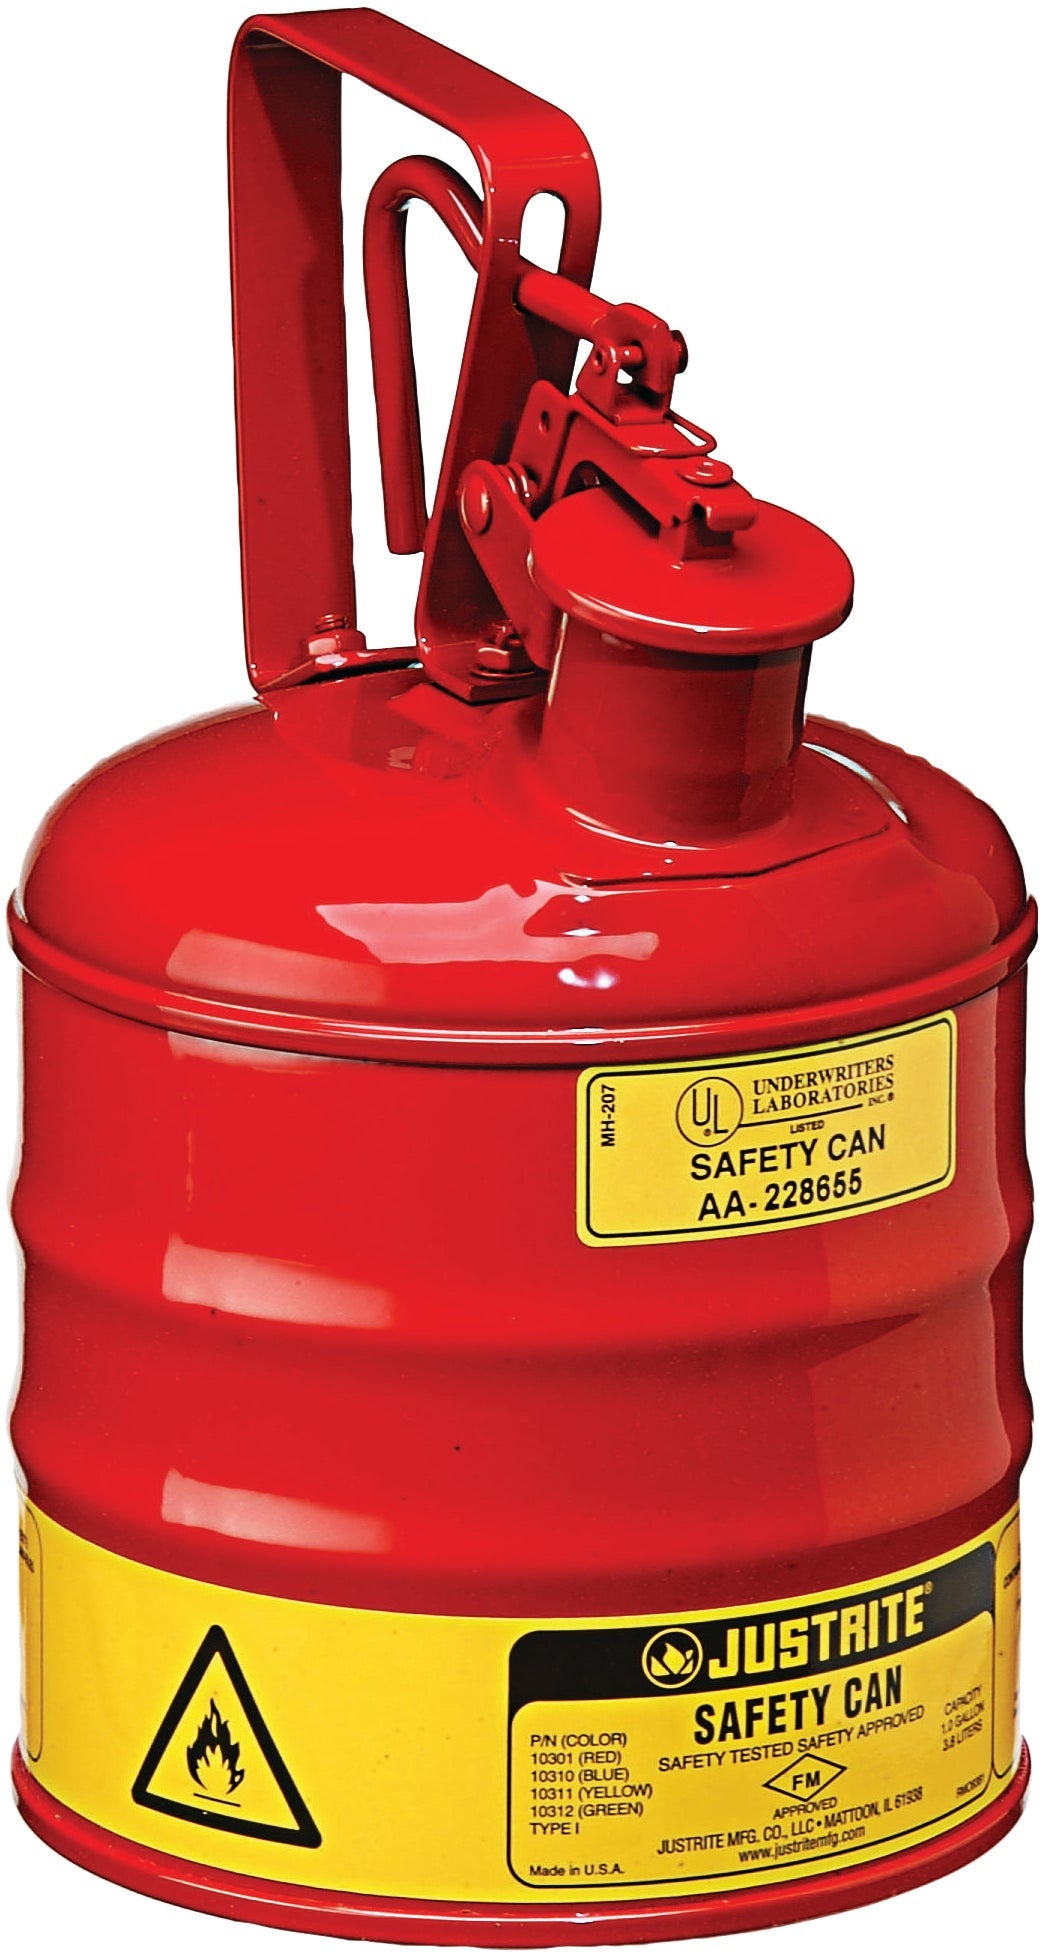 Sicherheitsbehälter Stahlblech pulverbeschichtet Rot, Inhalt: 4 Liter, Stahlblech pulverbeschichtet glatt